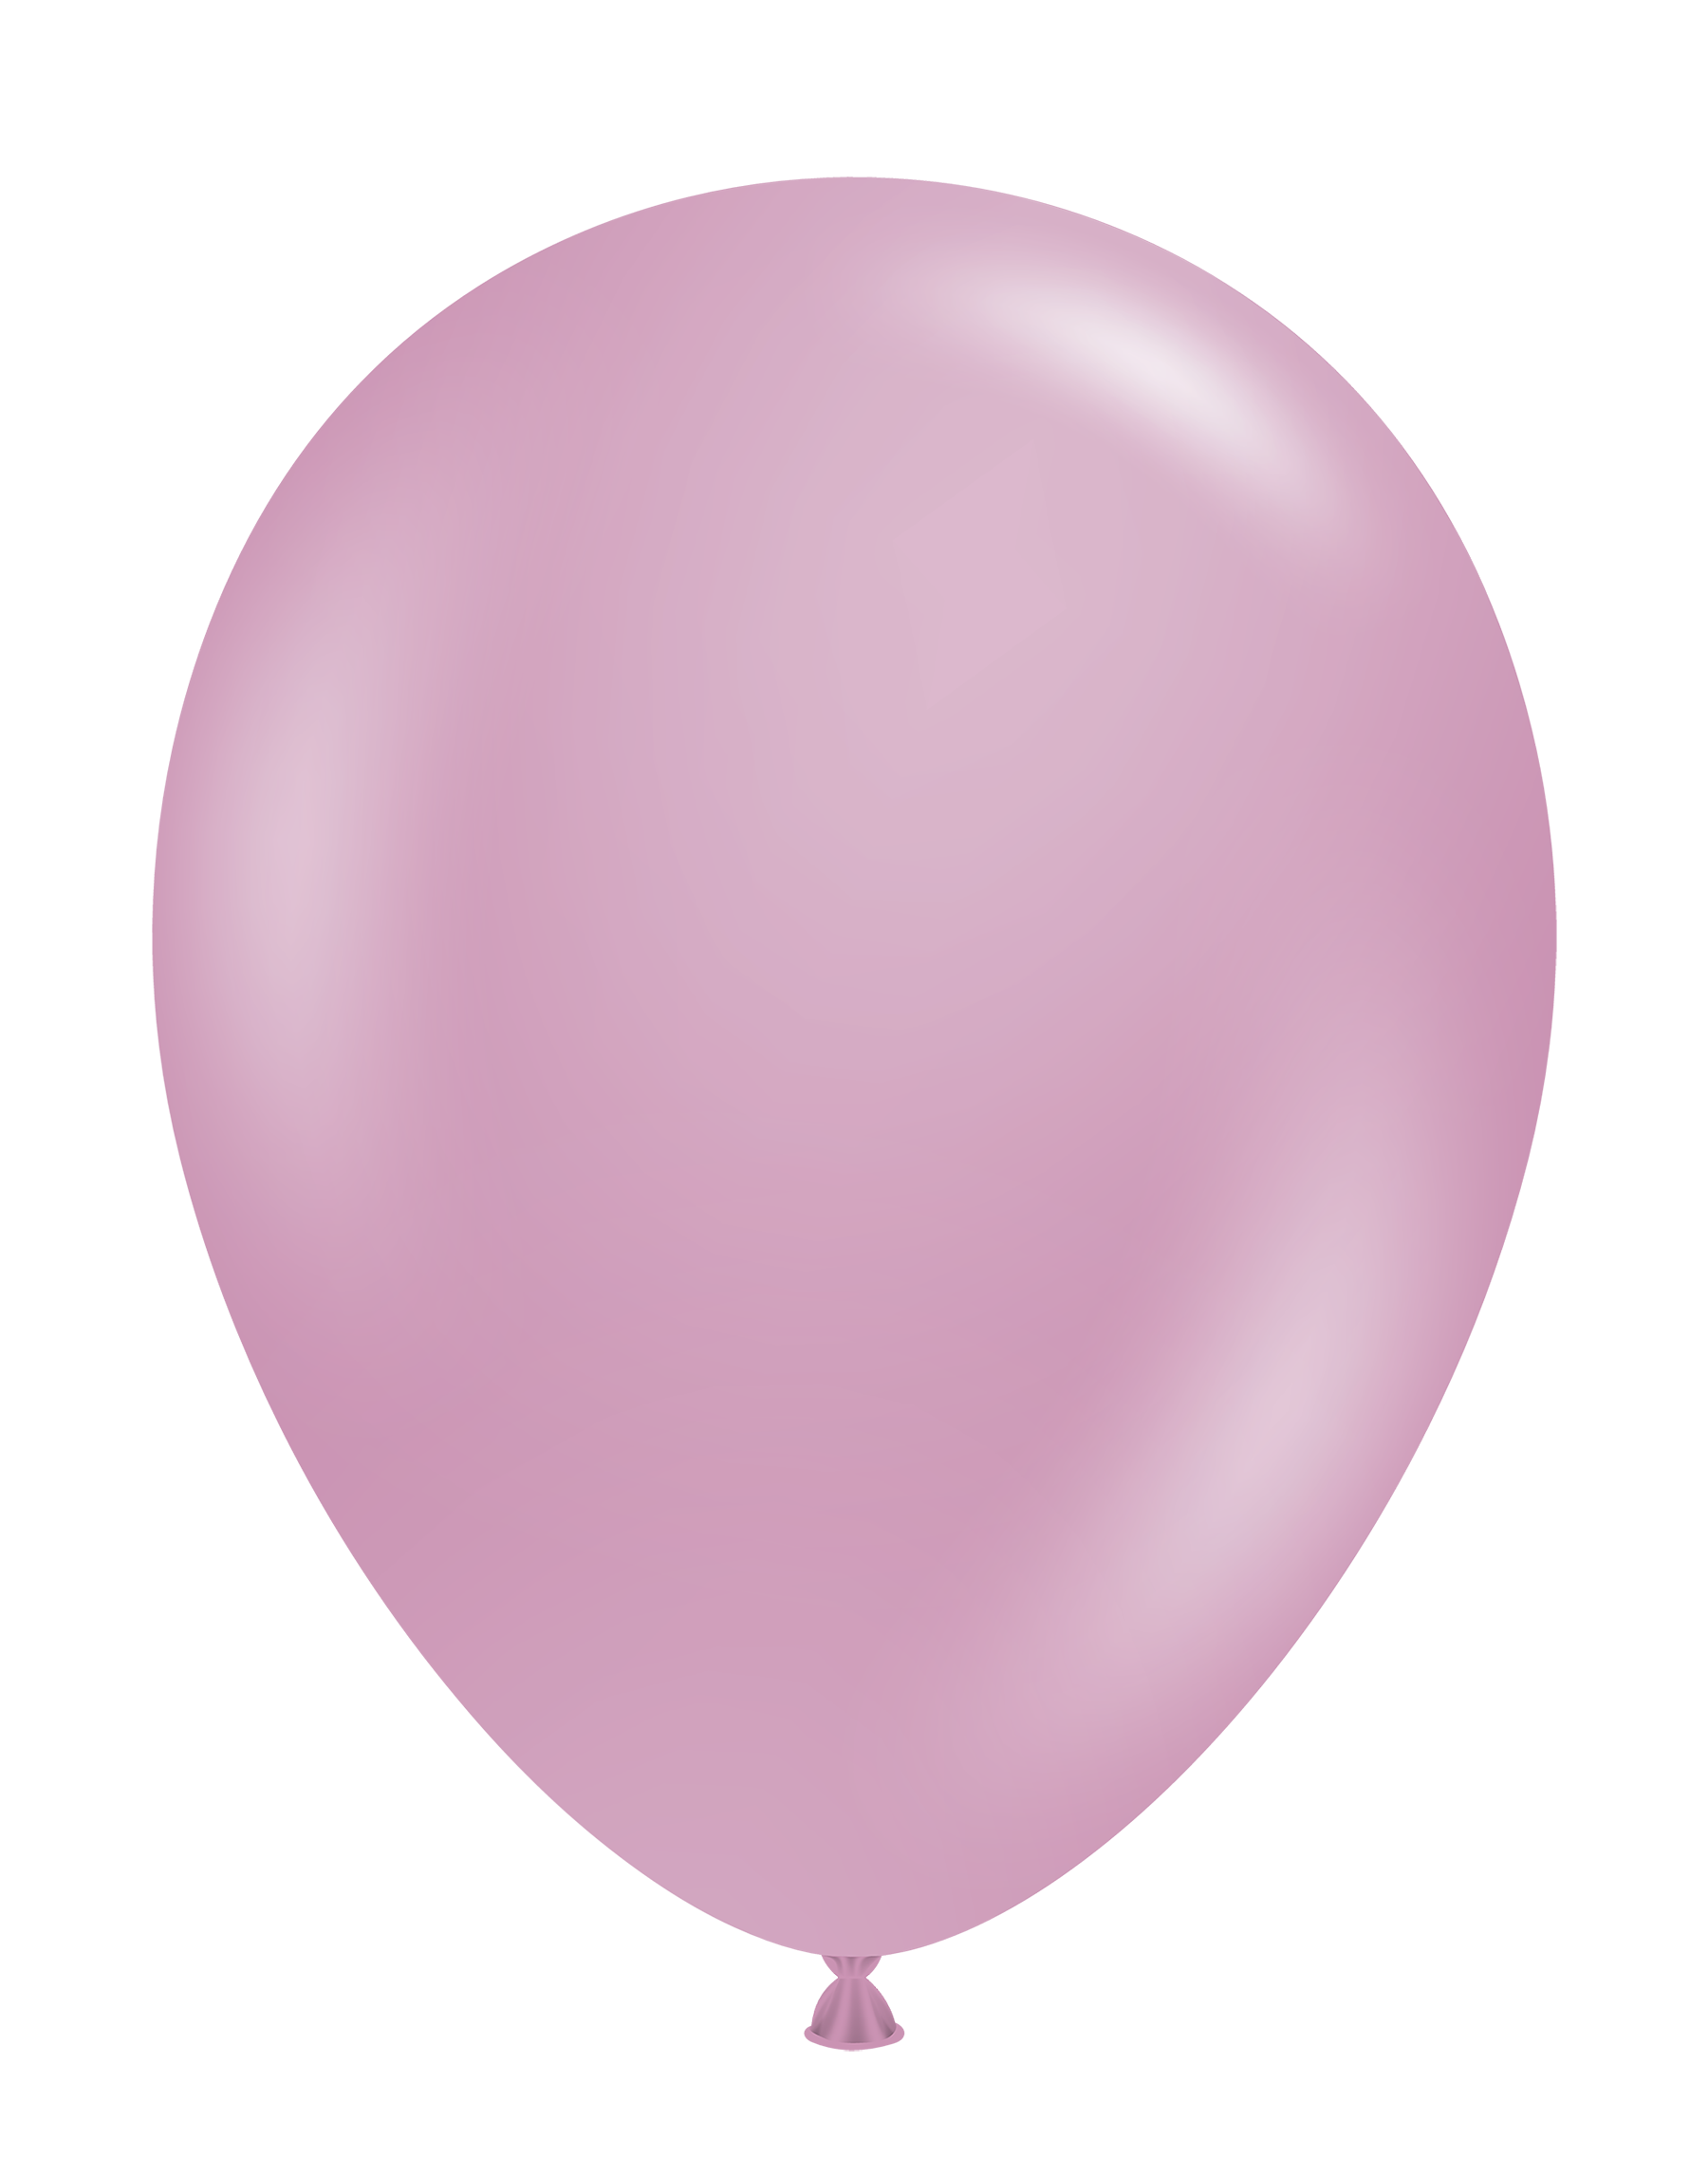 5" TUFTEX Canyon Rose Latex Balloons | 50 Count